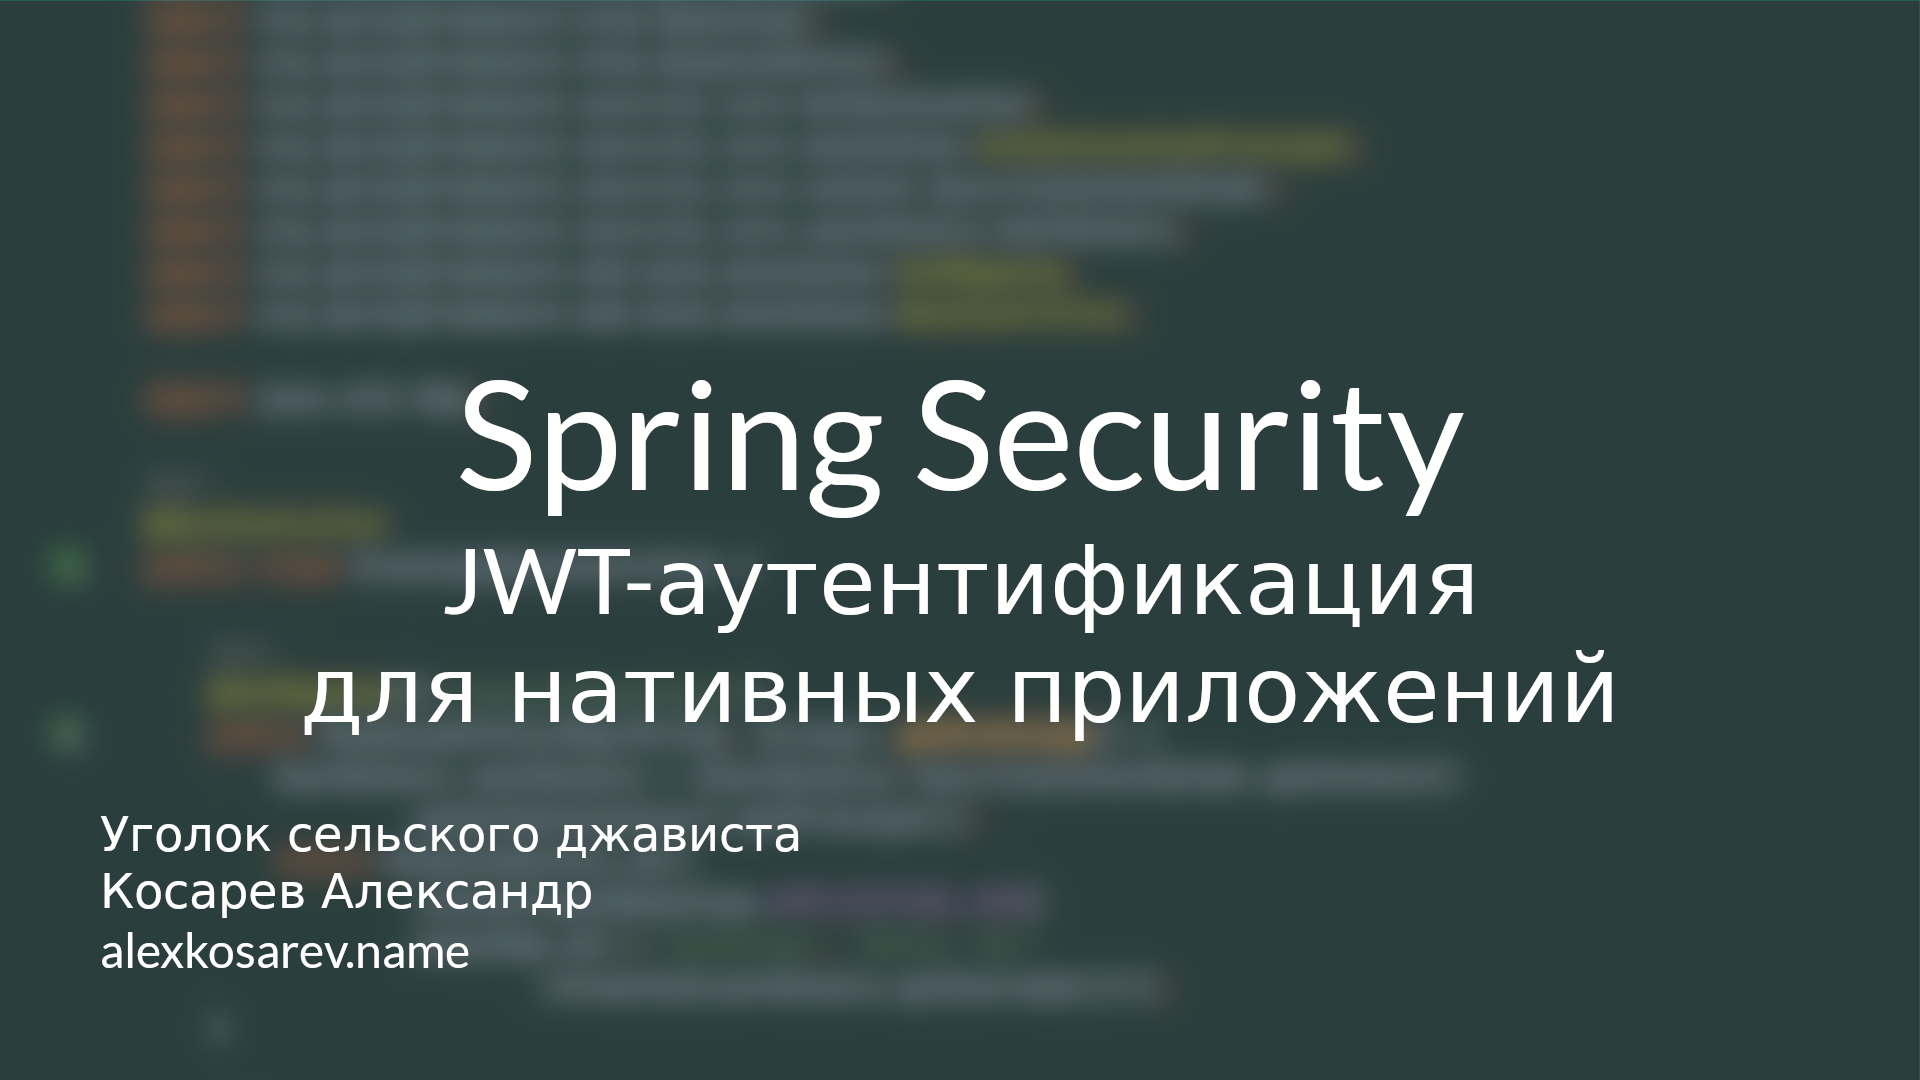 JWT-аутентификация для нативных приложений - Spring Security